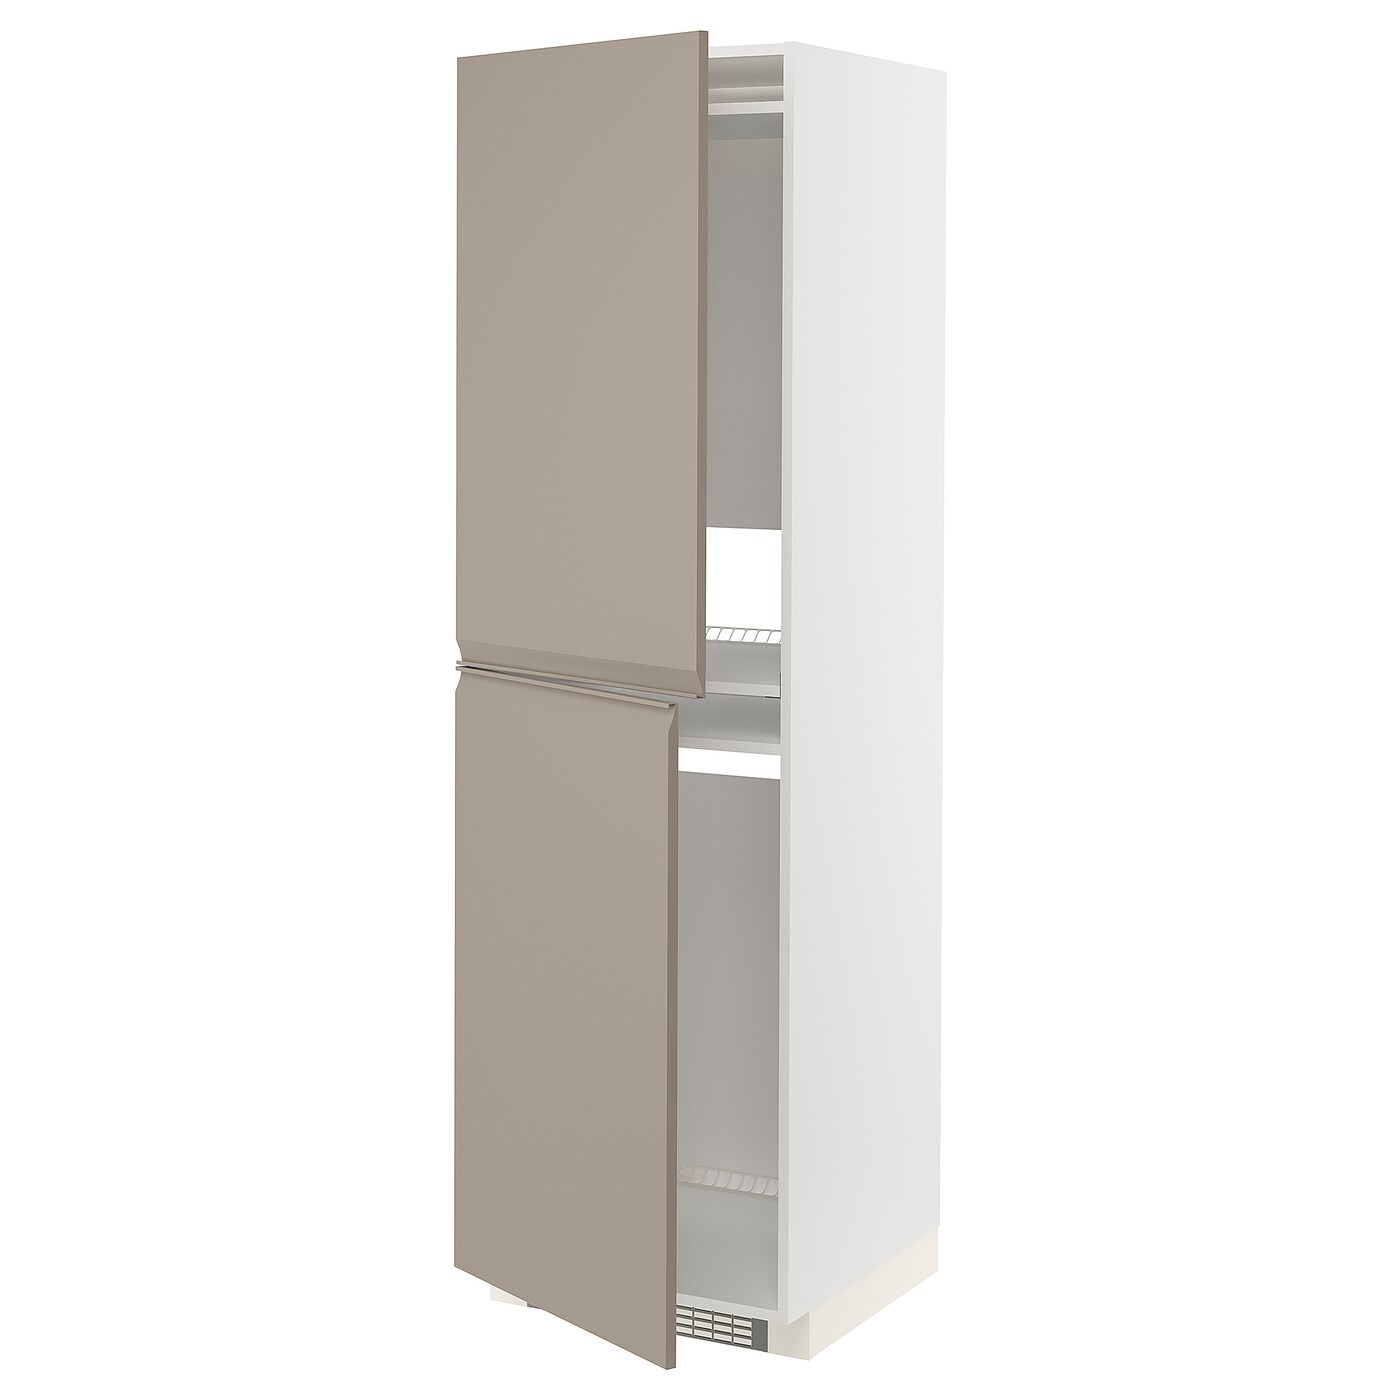 Высокий шкаф - IKEA METOD/МЕТОД ИКЕА, 200х60х60 см, белый/бежевый